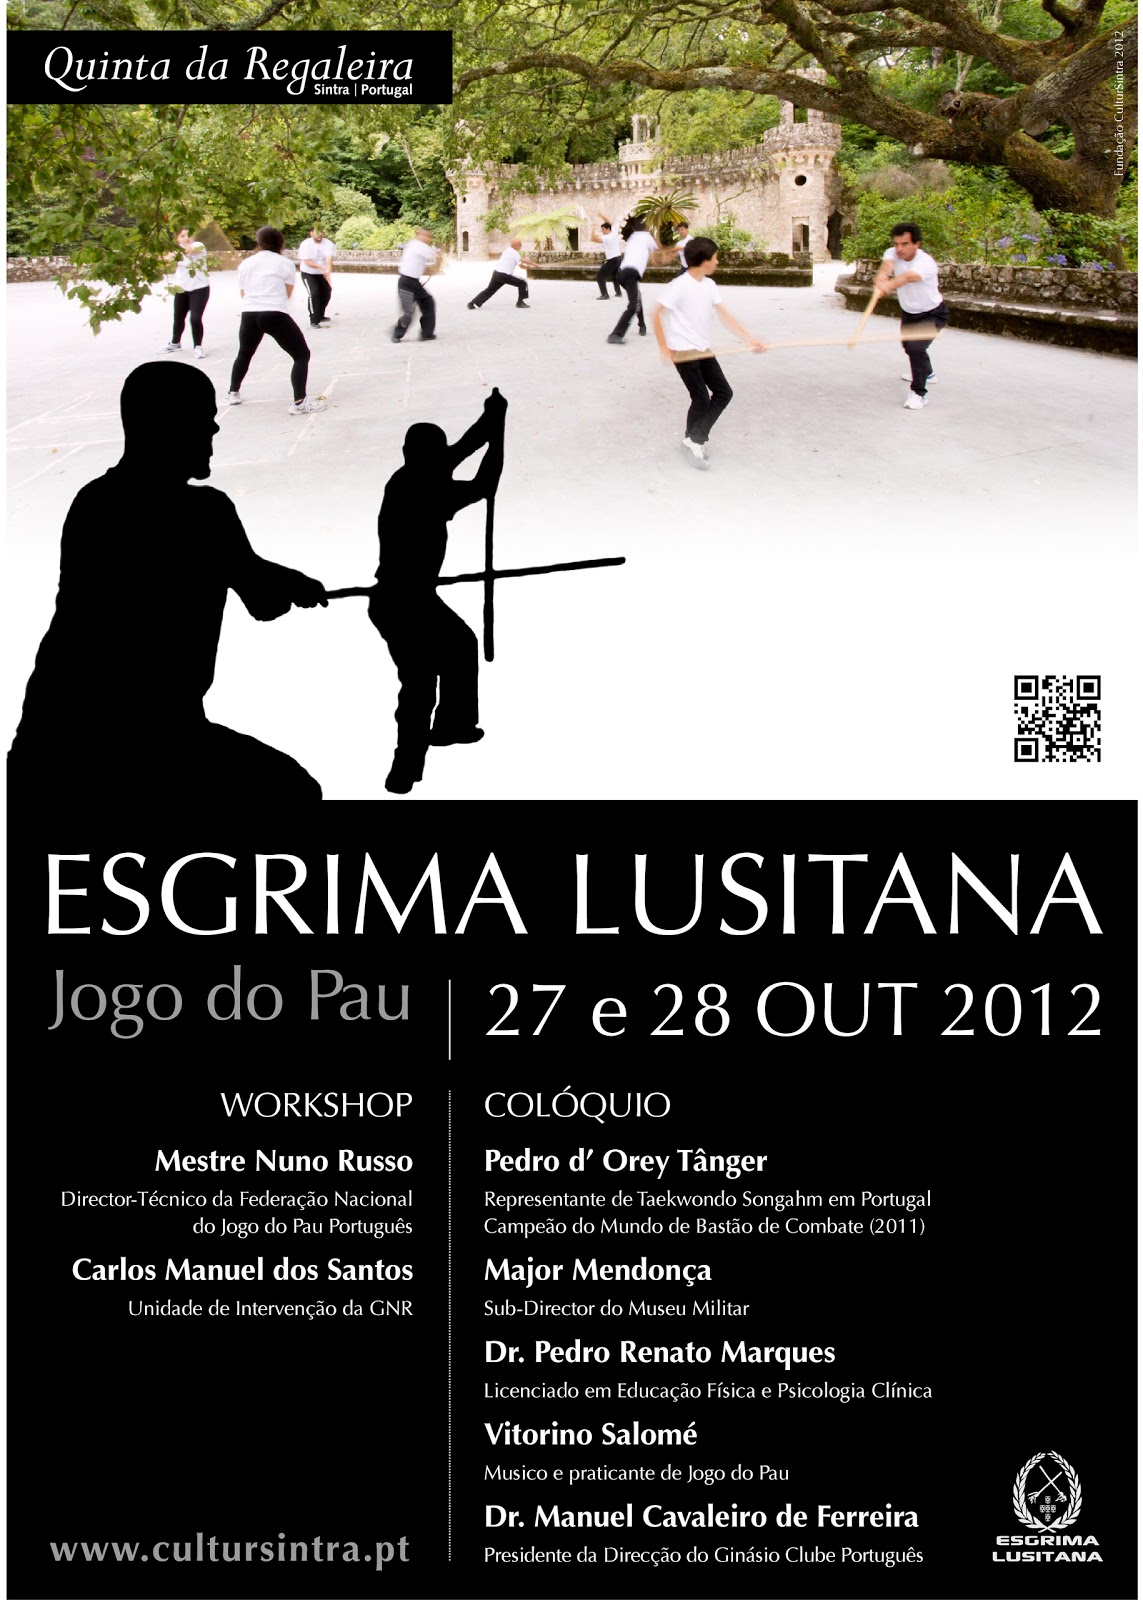 EsgrimaLusitana cartazA3.jpg